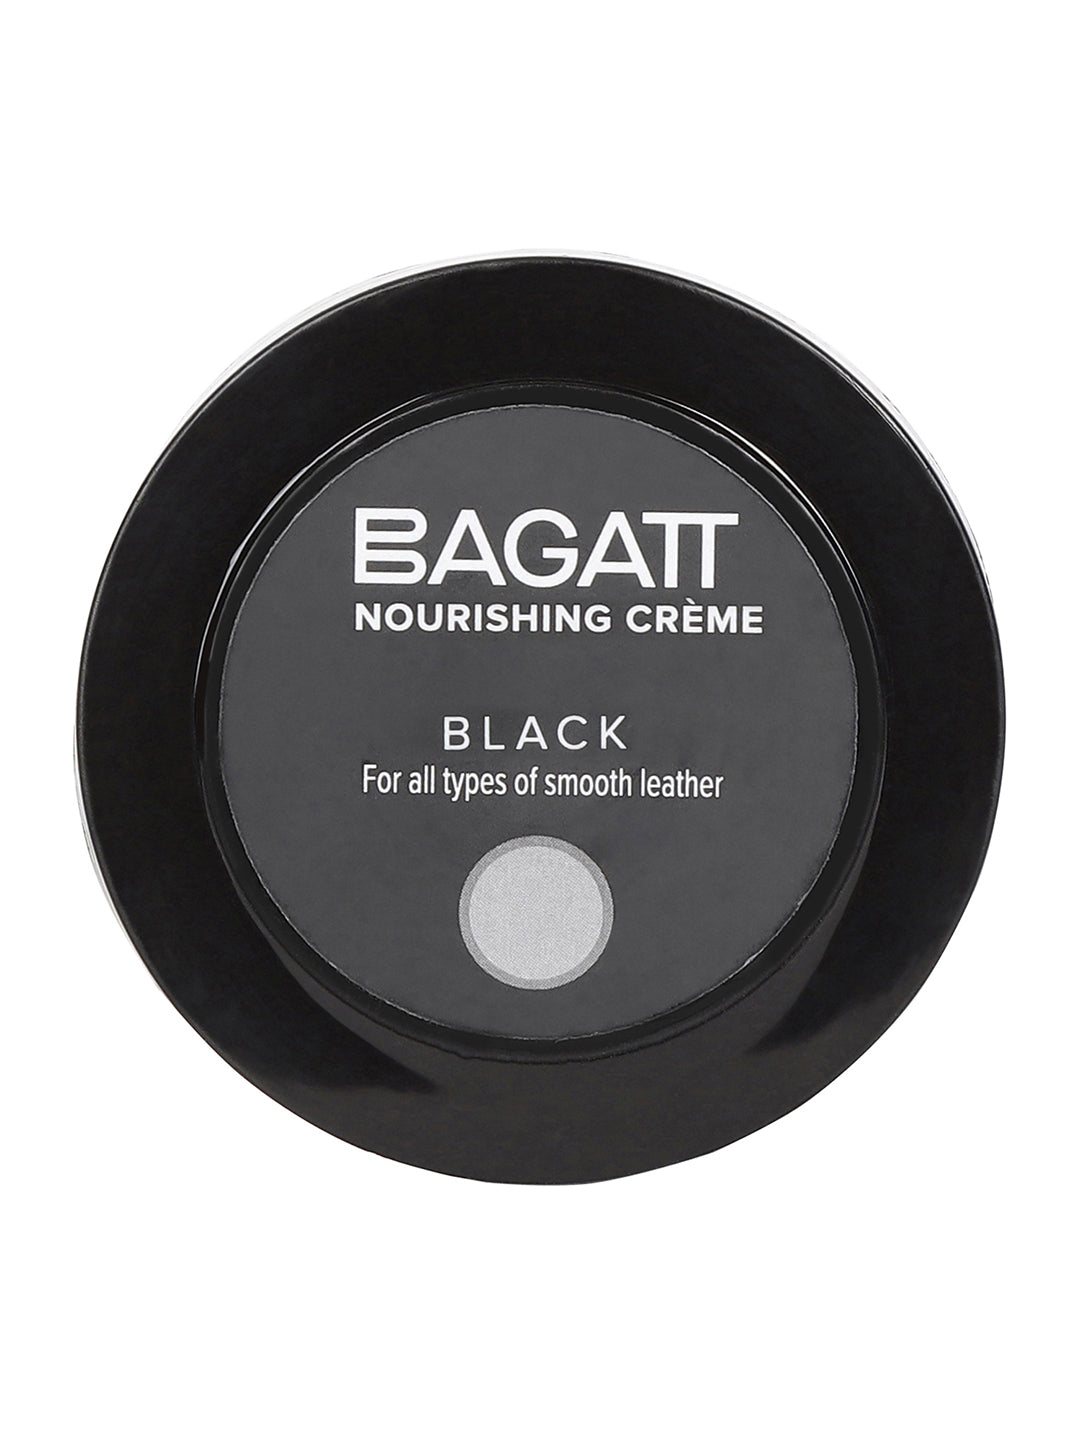 BAGATT Black Nourishing Creme